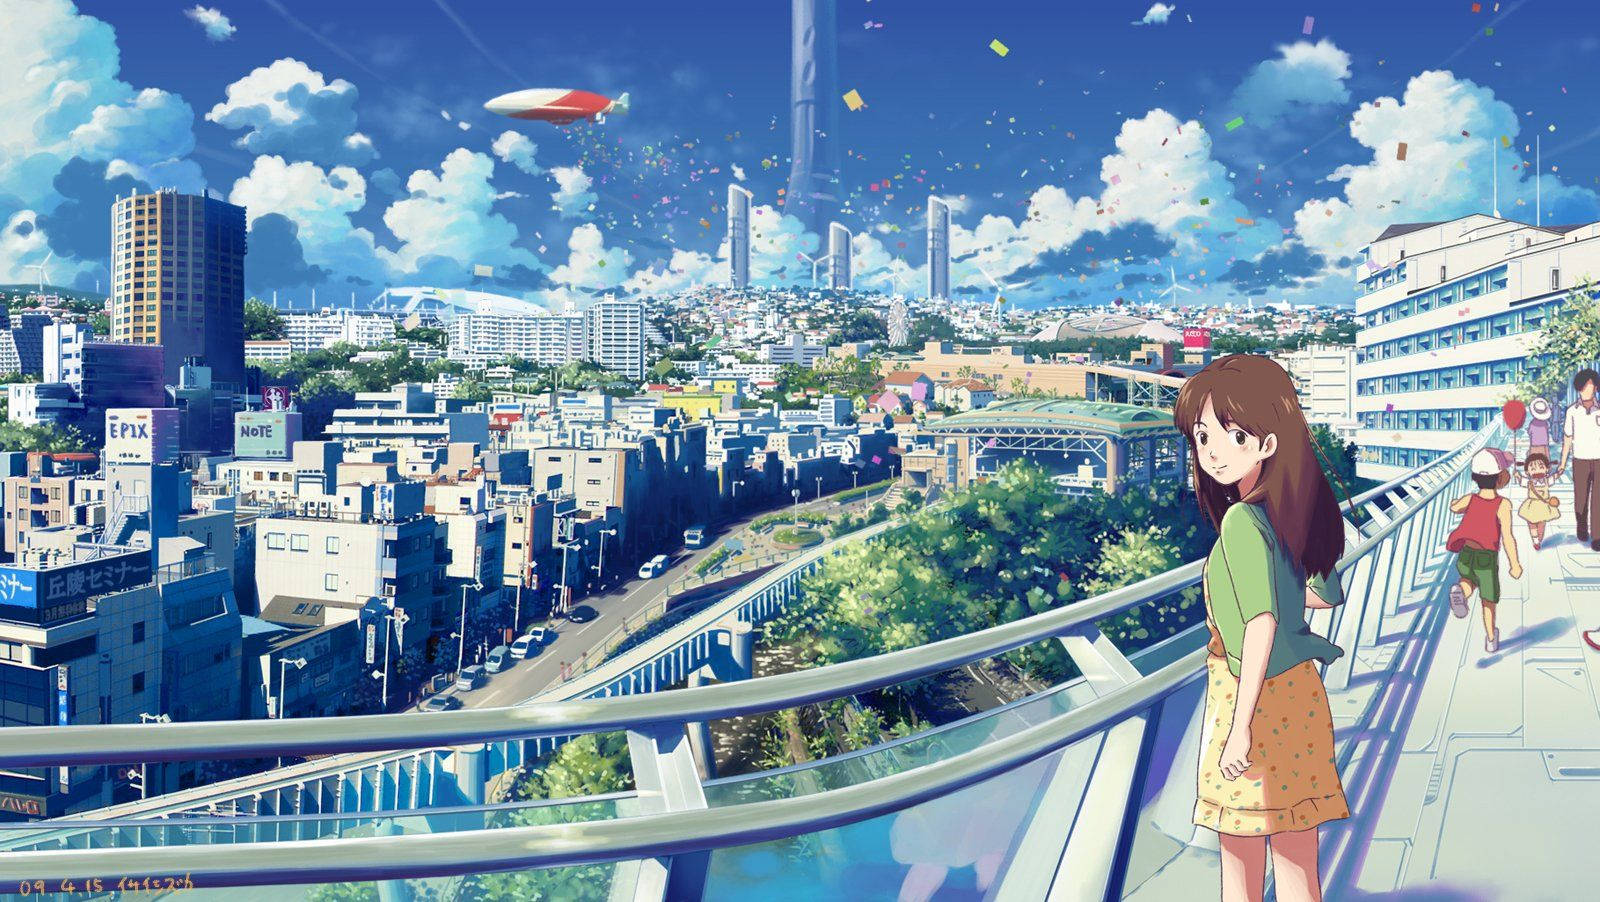 Bright Scenic Anime City Background